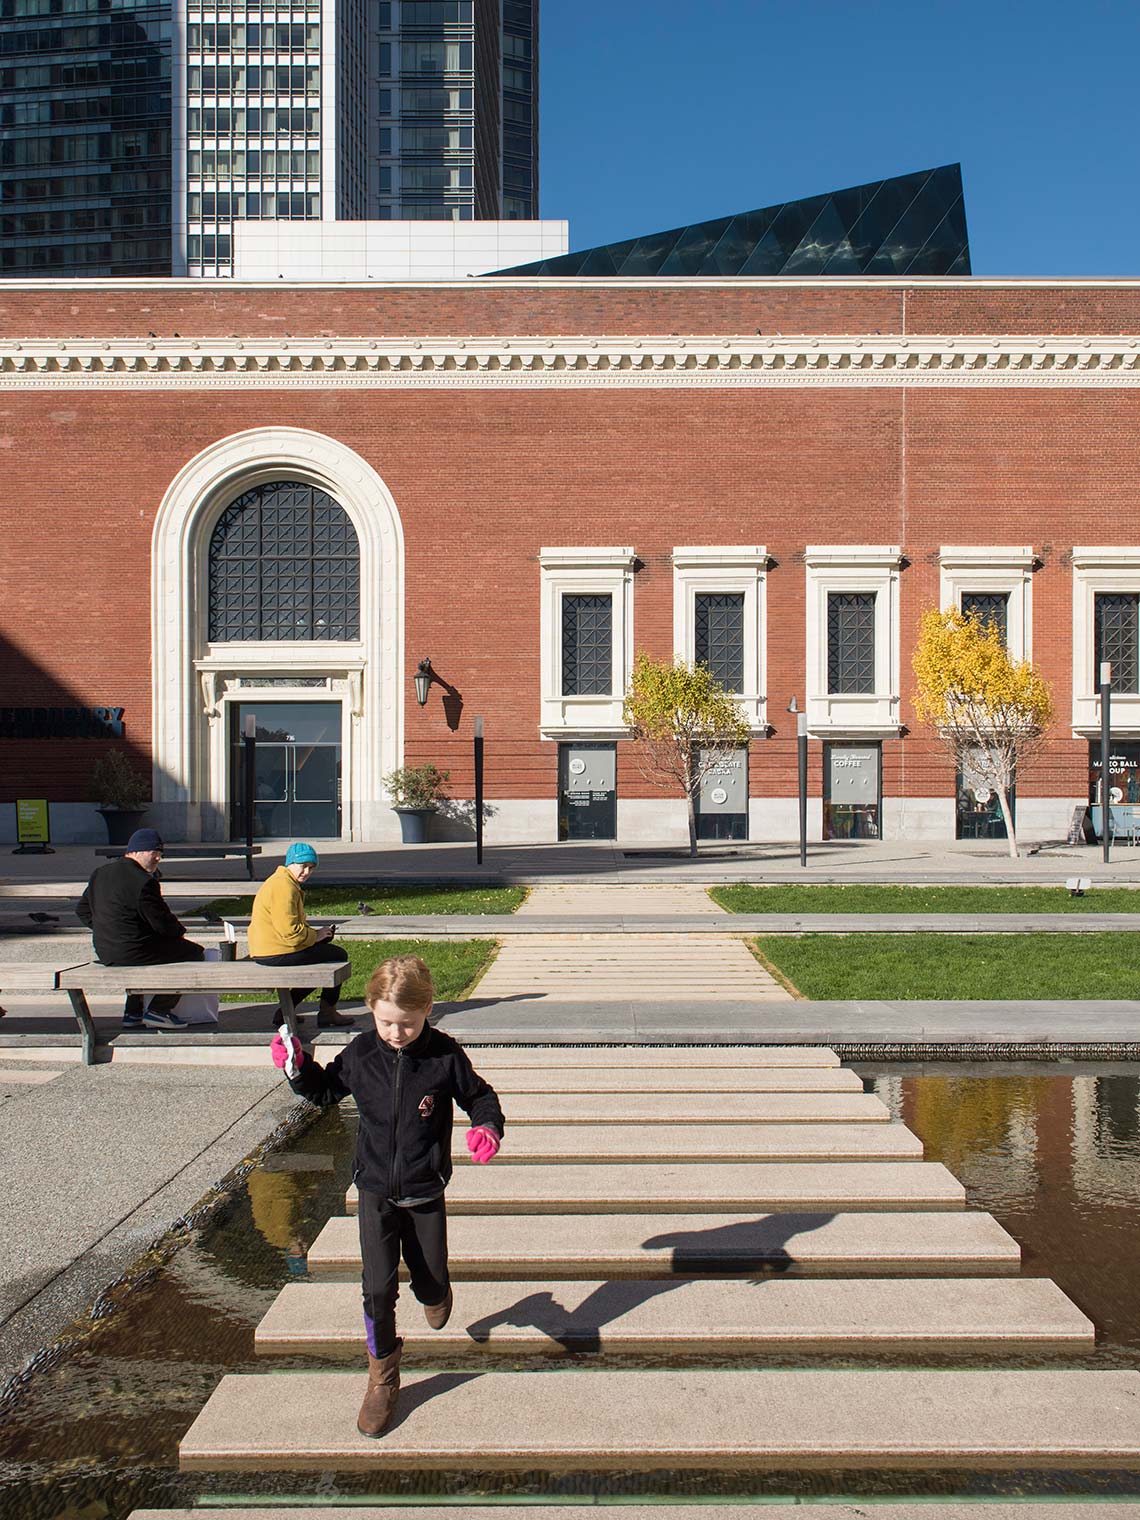 Daniel Libeskind  |  Contemporary Jewish Museum - San Francisco